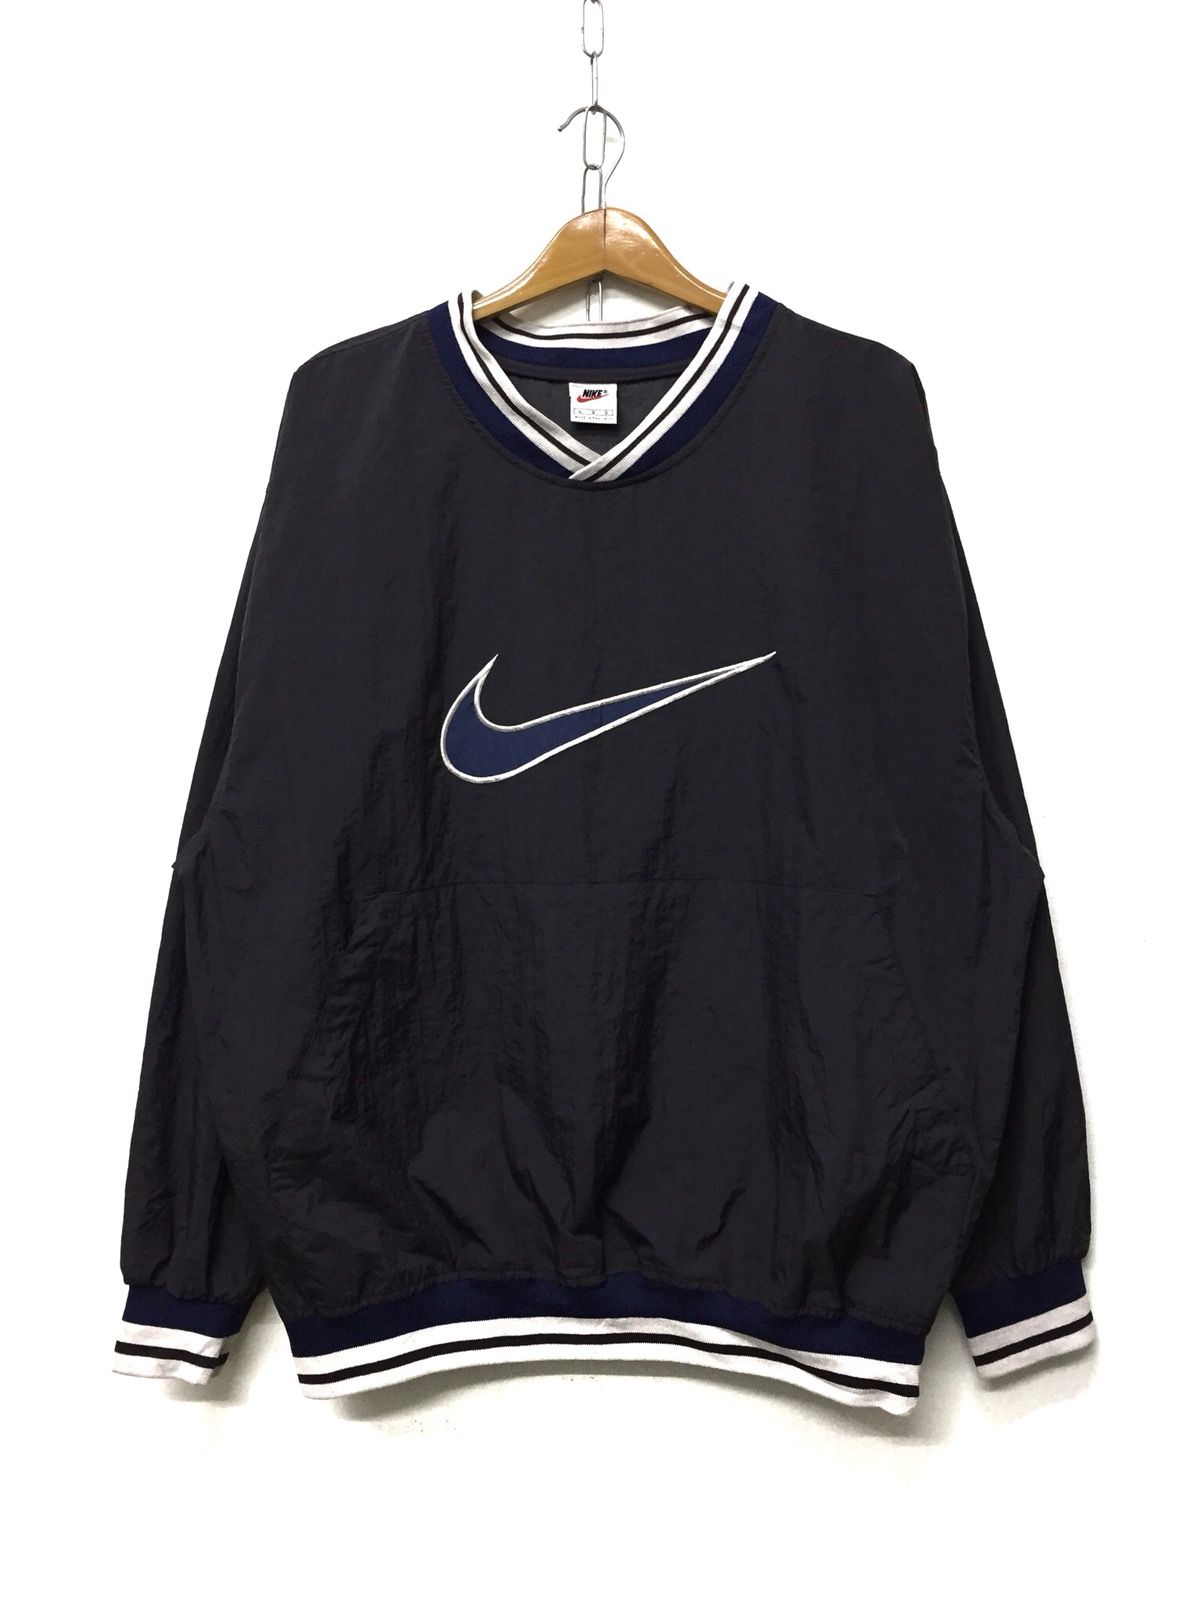 Nike Vintage Nike Sweatshirt Big Logo Embroidered | Grailed